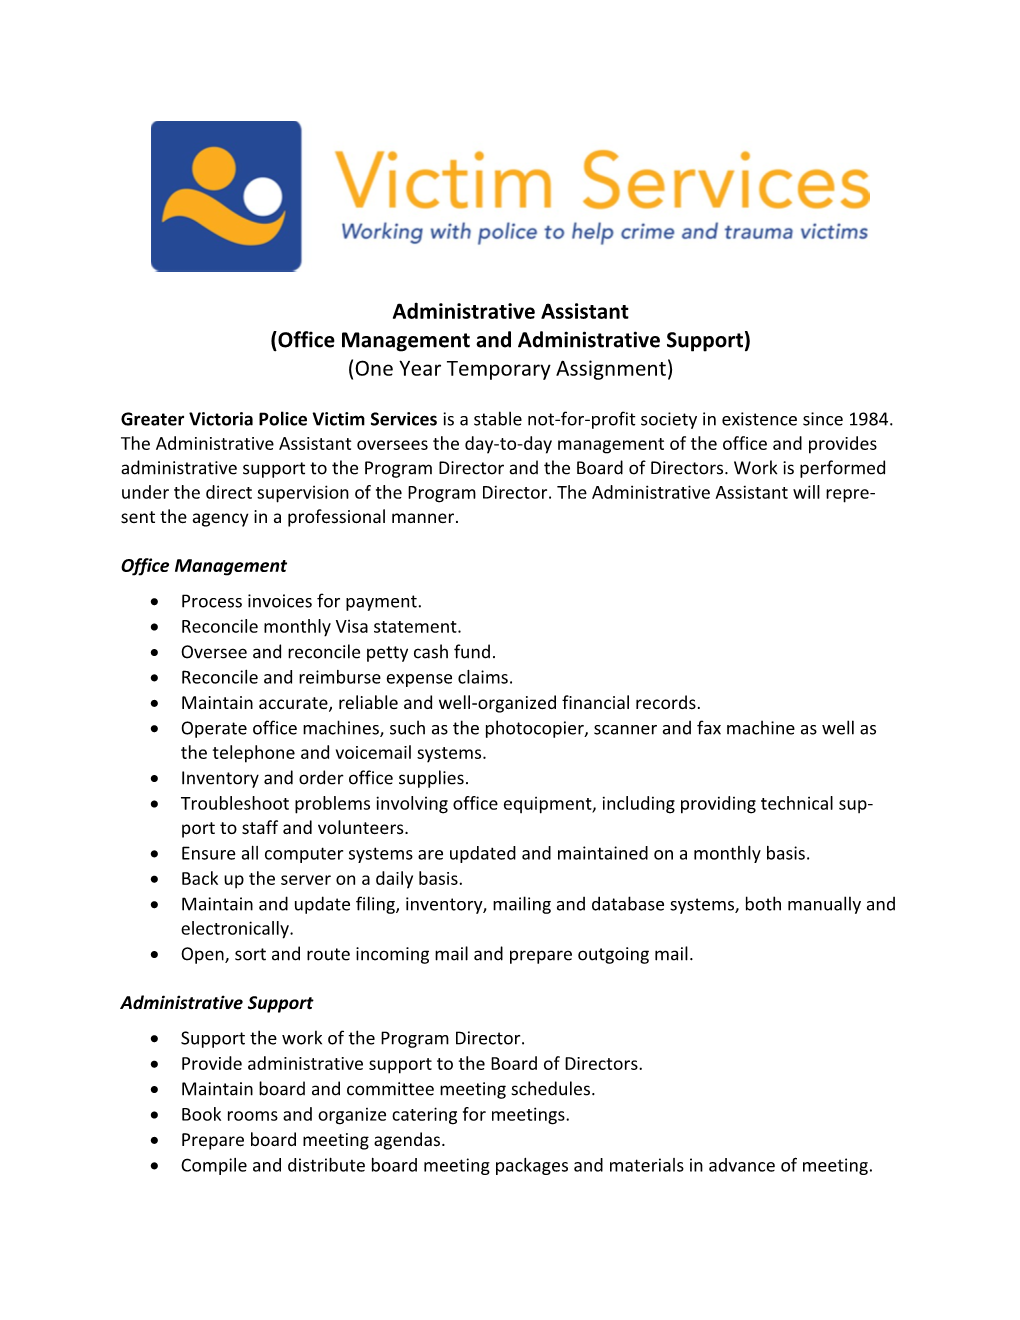 Greater Victoria Victim Services